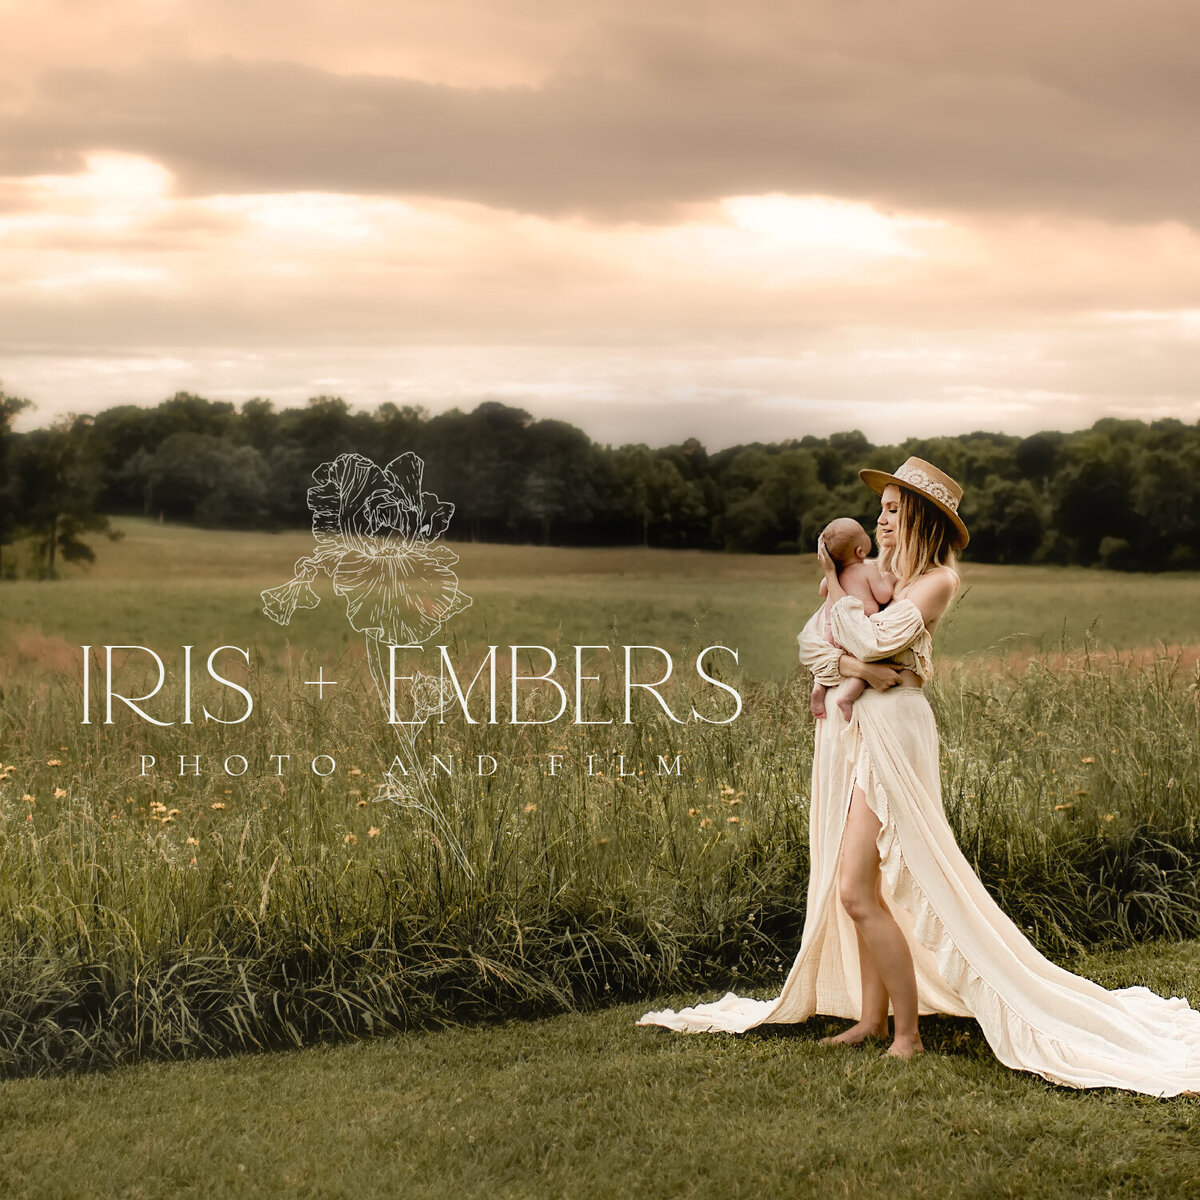 Iris and Embers Brand Launch-43